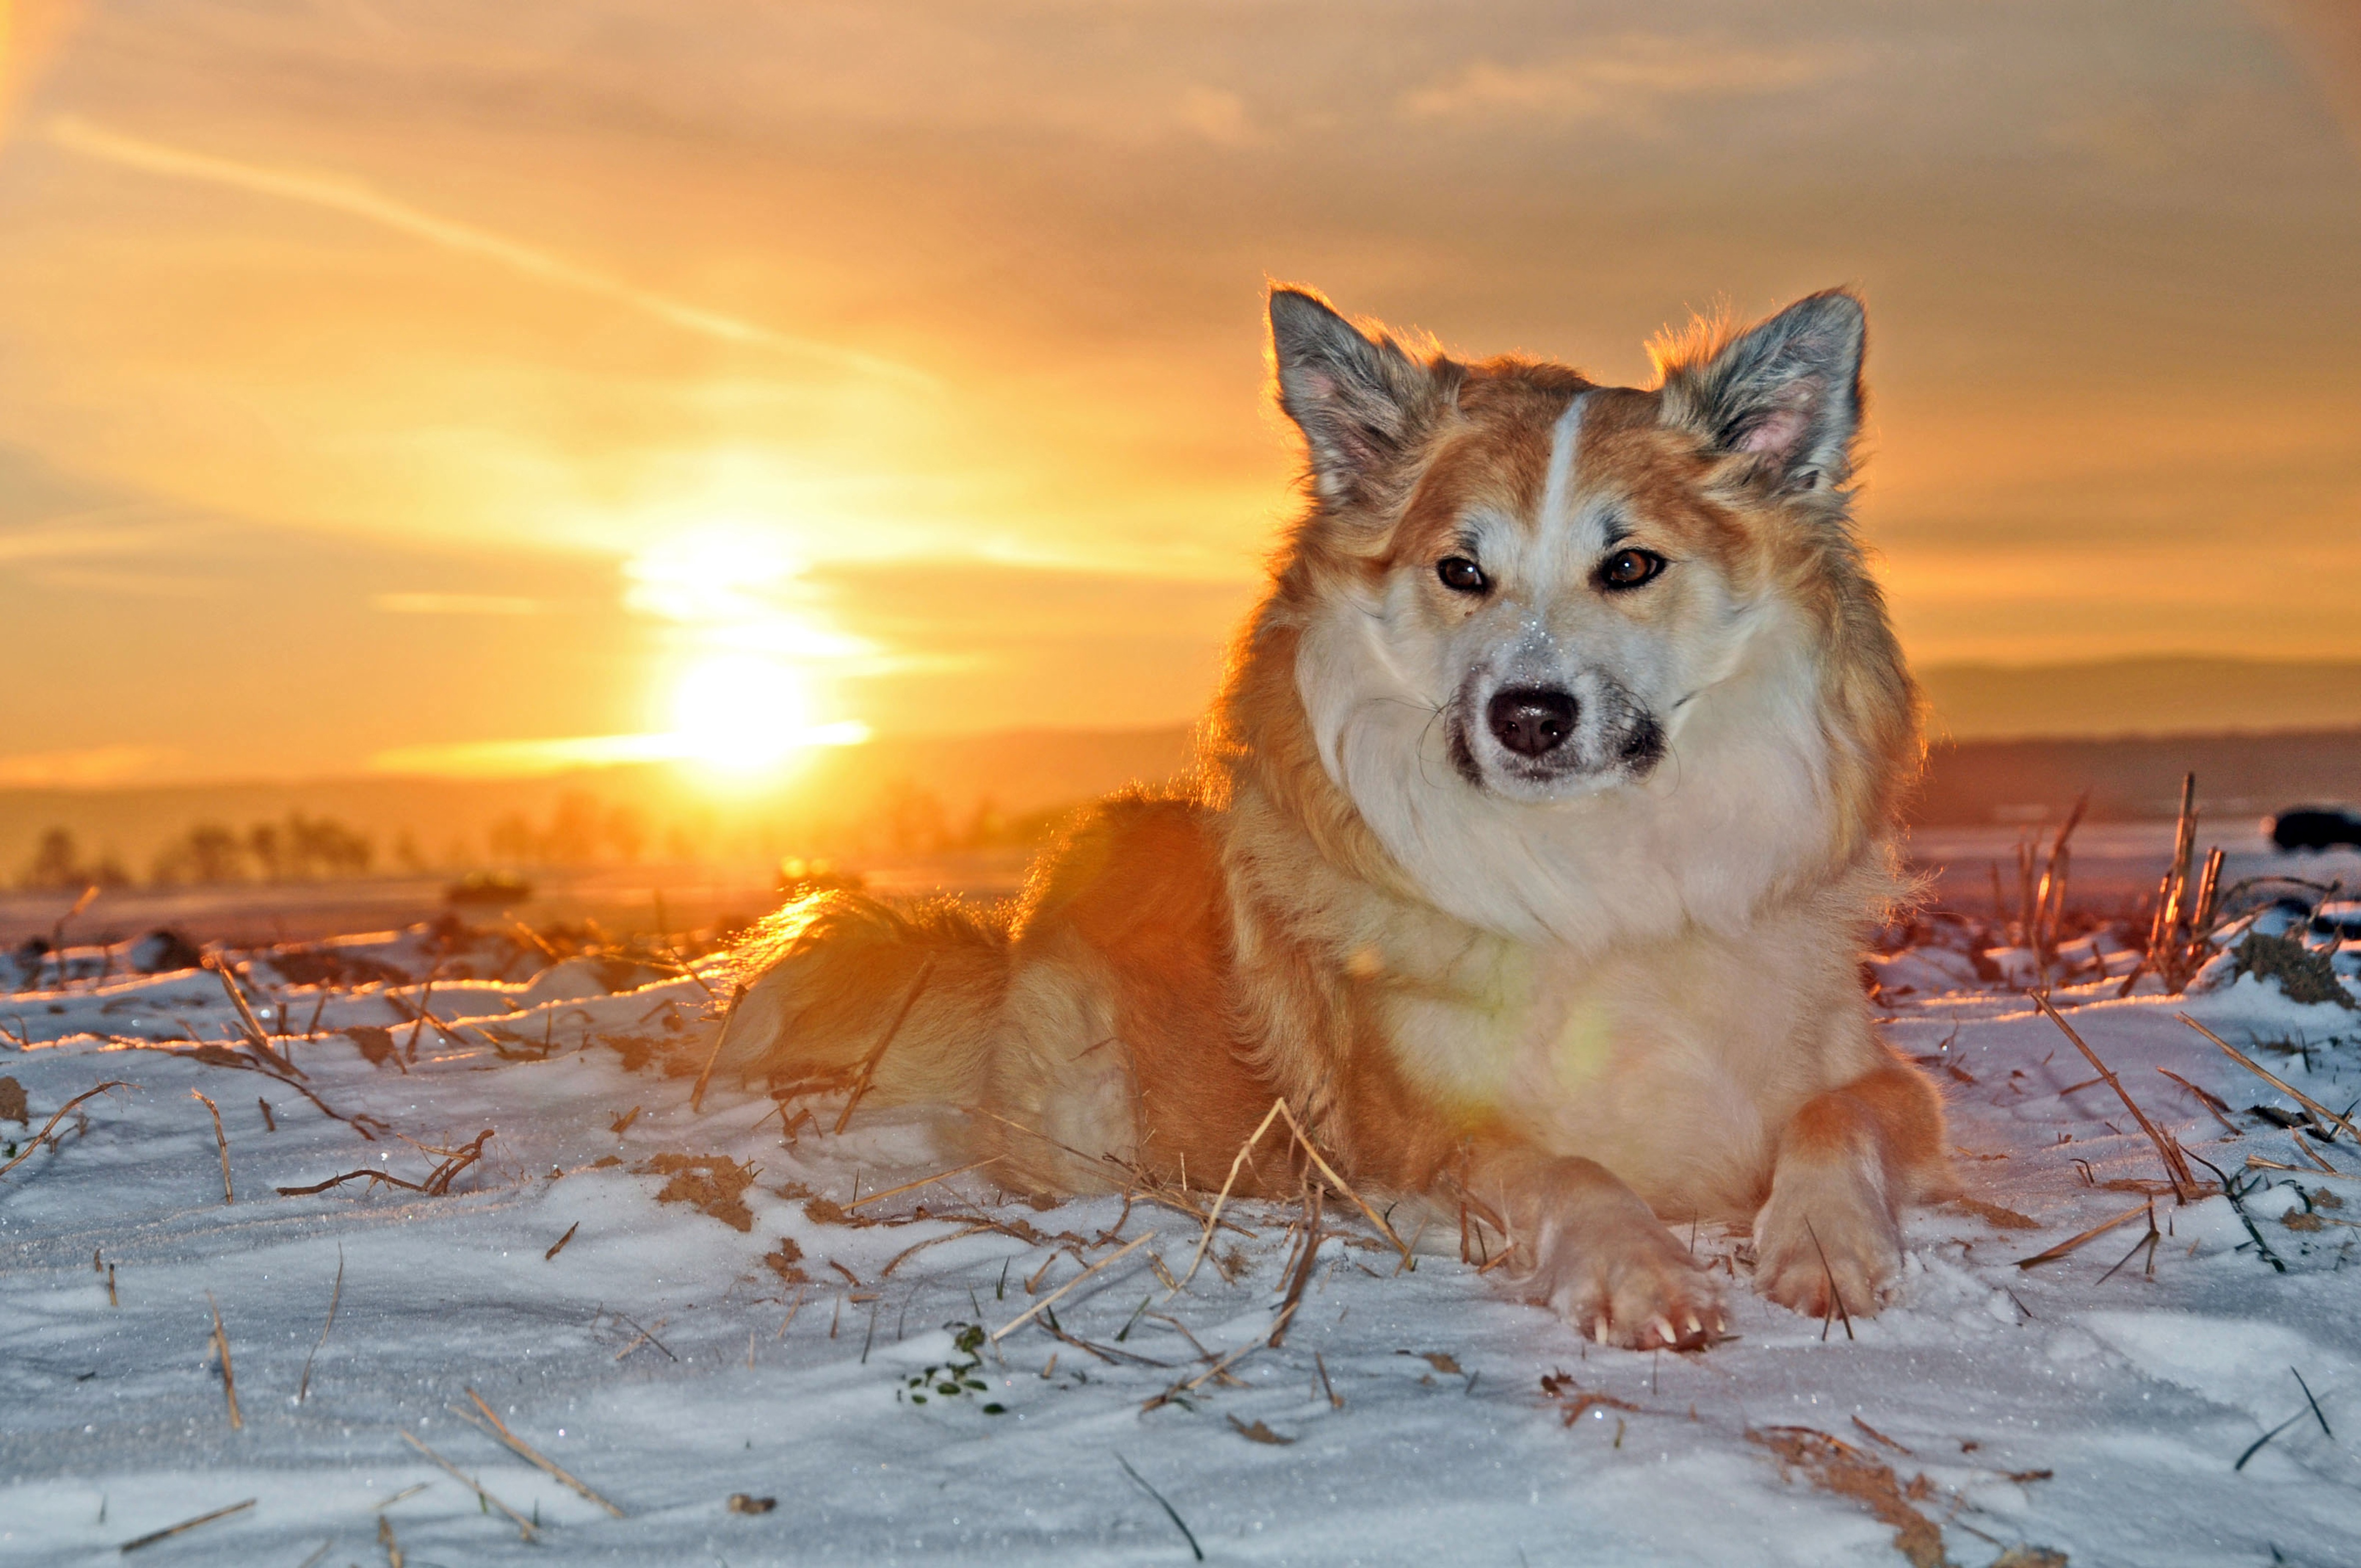 Islandia i pies na śniegu